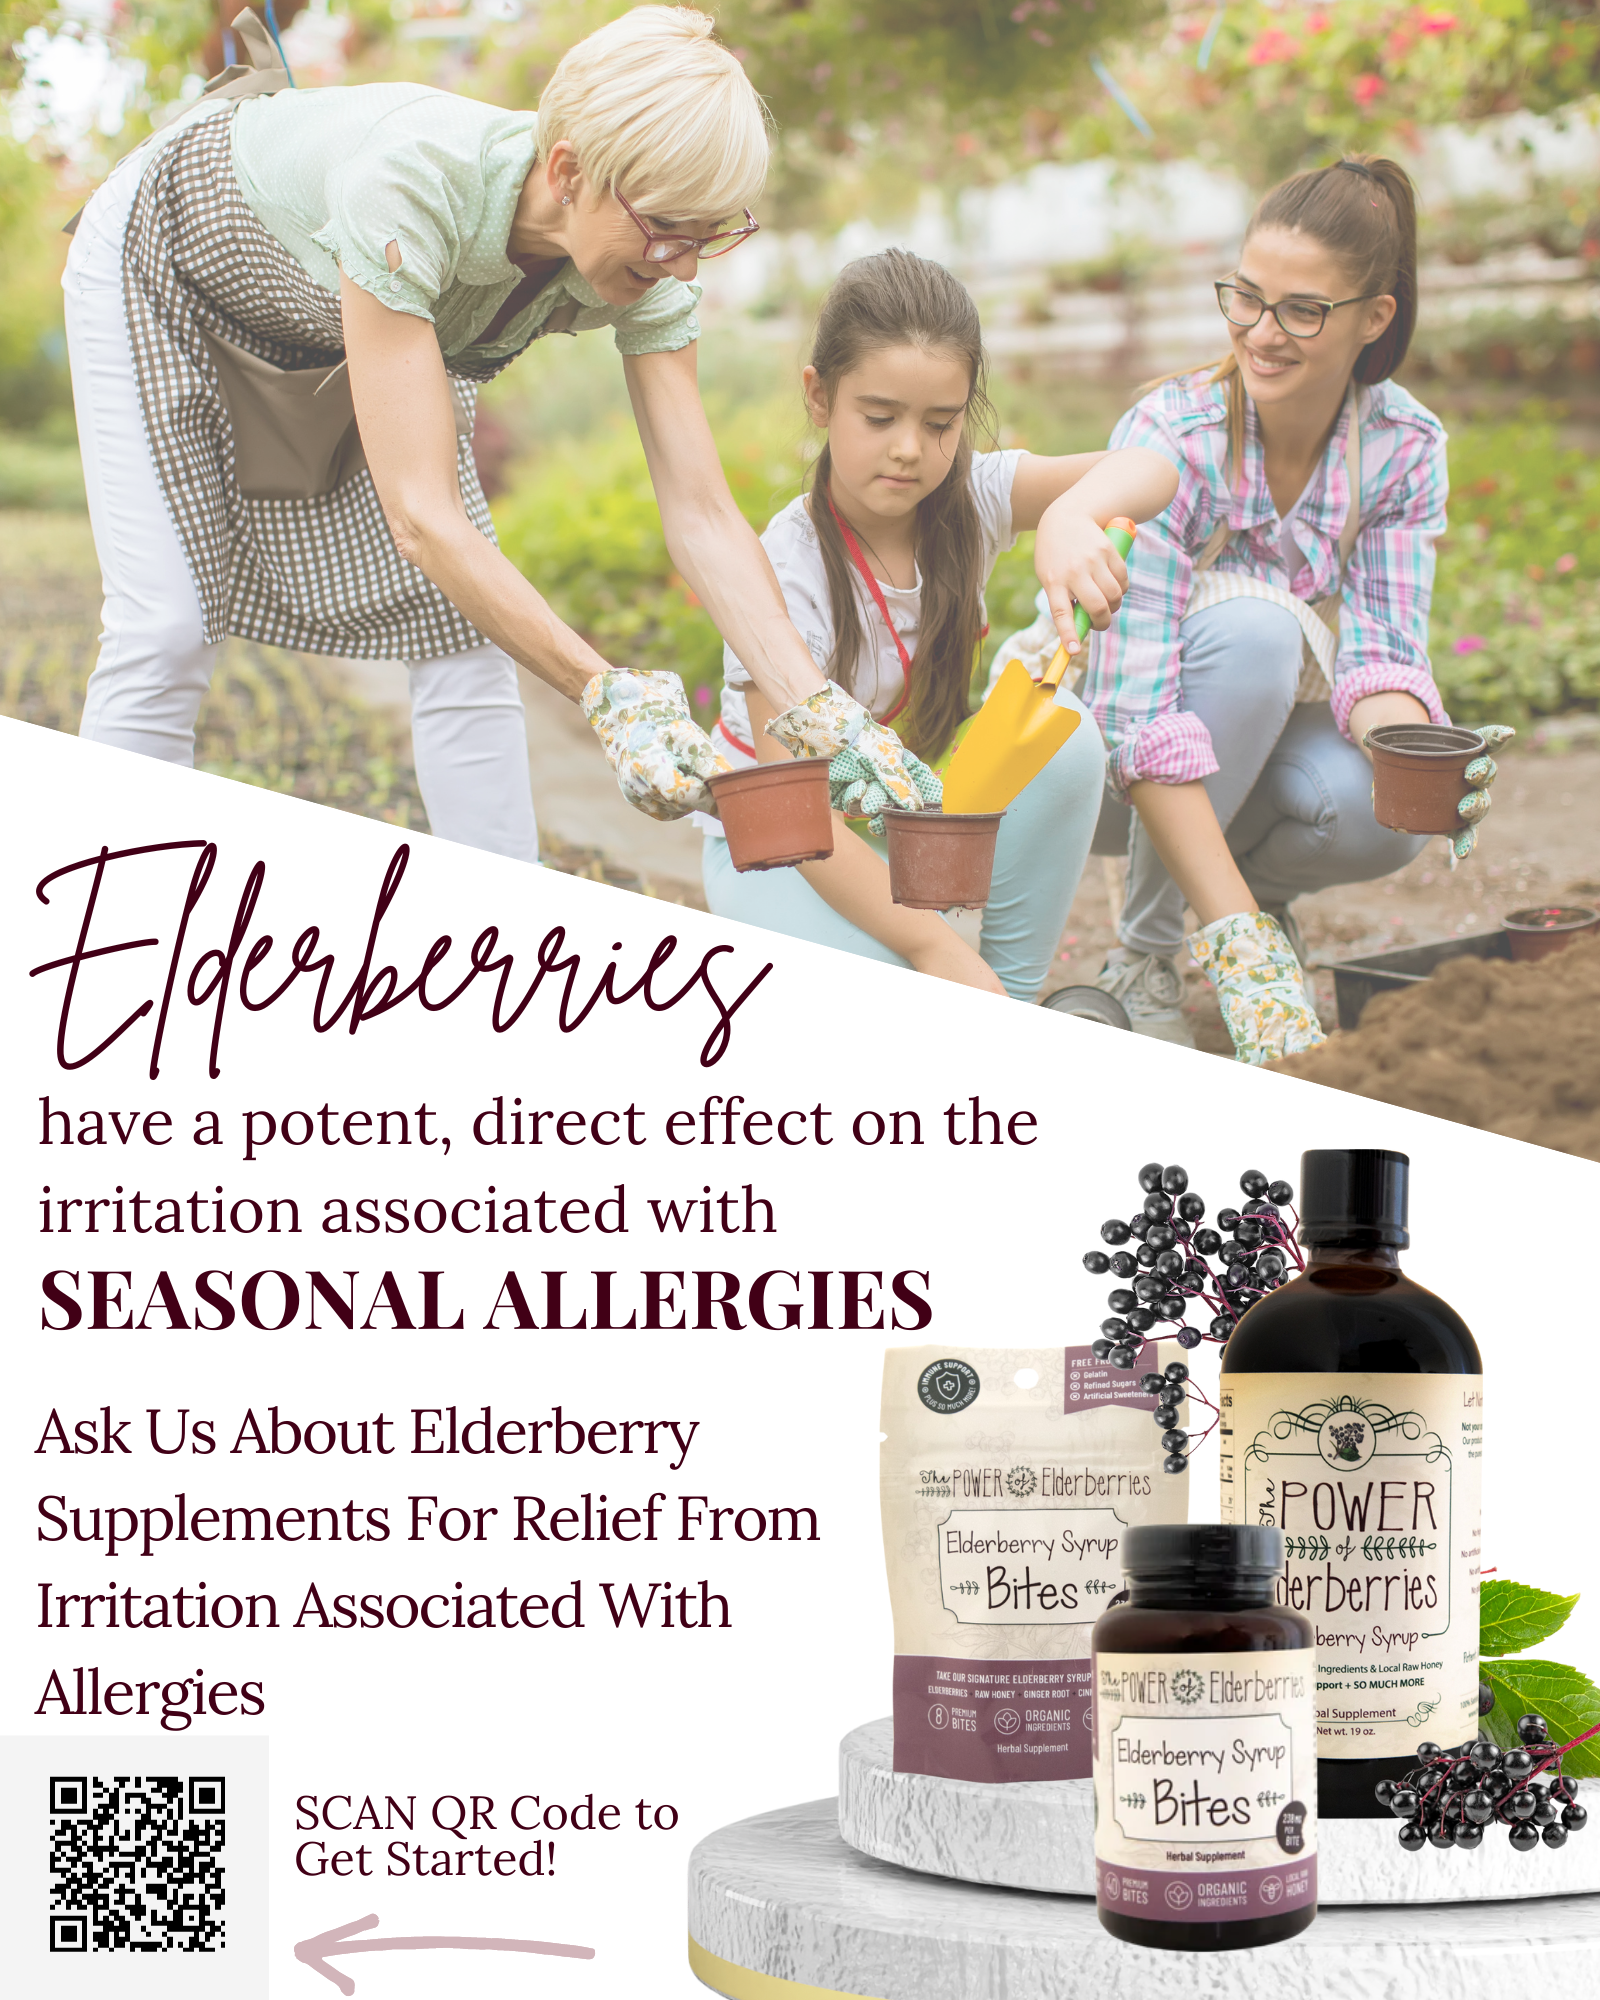 Elderberry: A Natural Medicine for Allergies